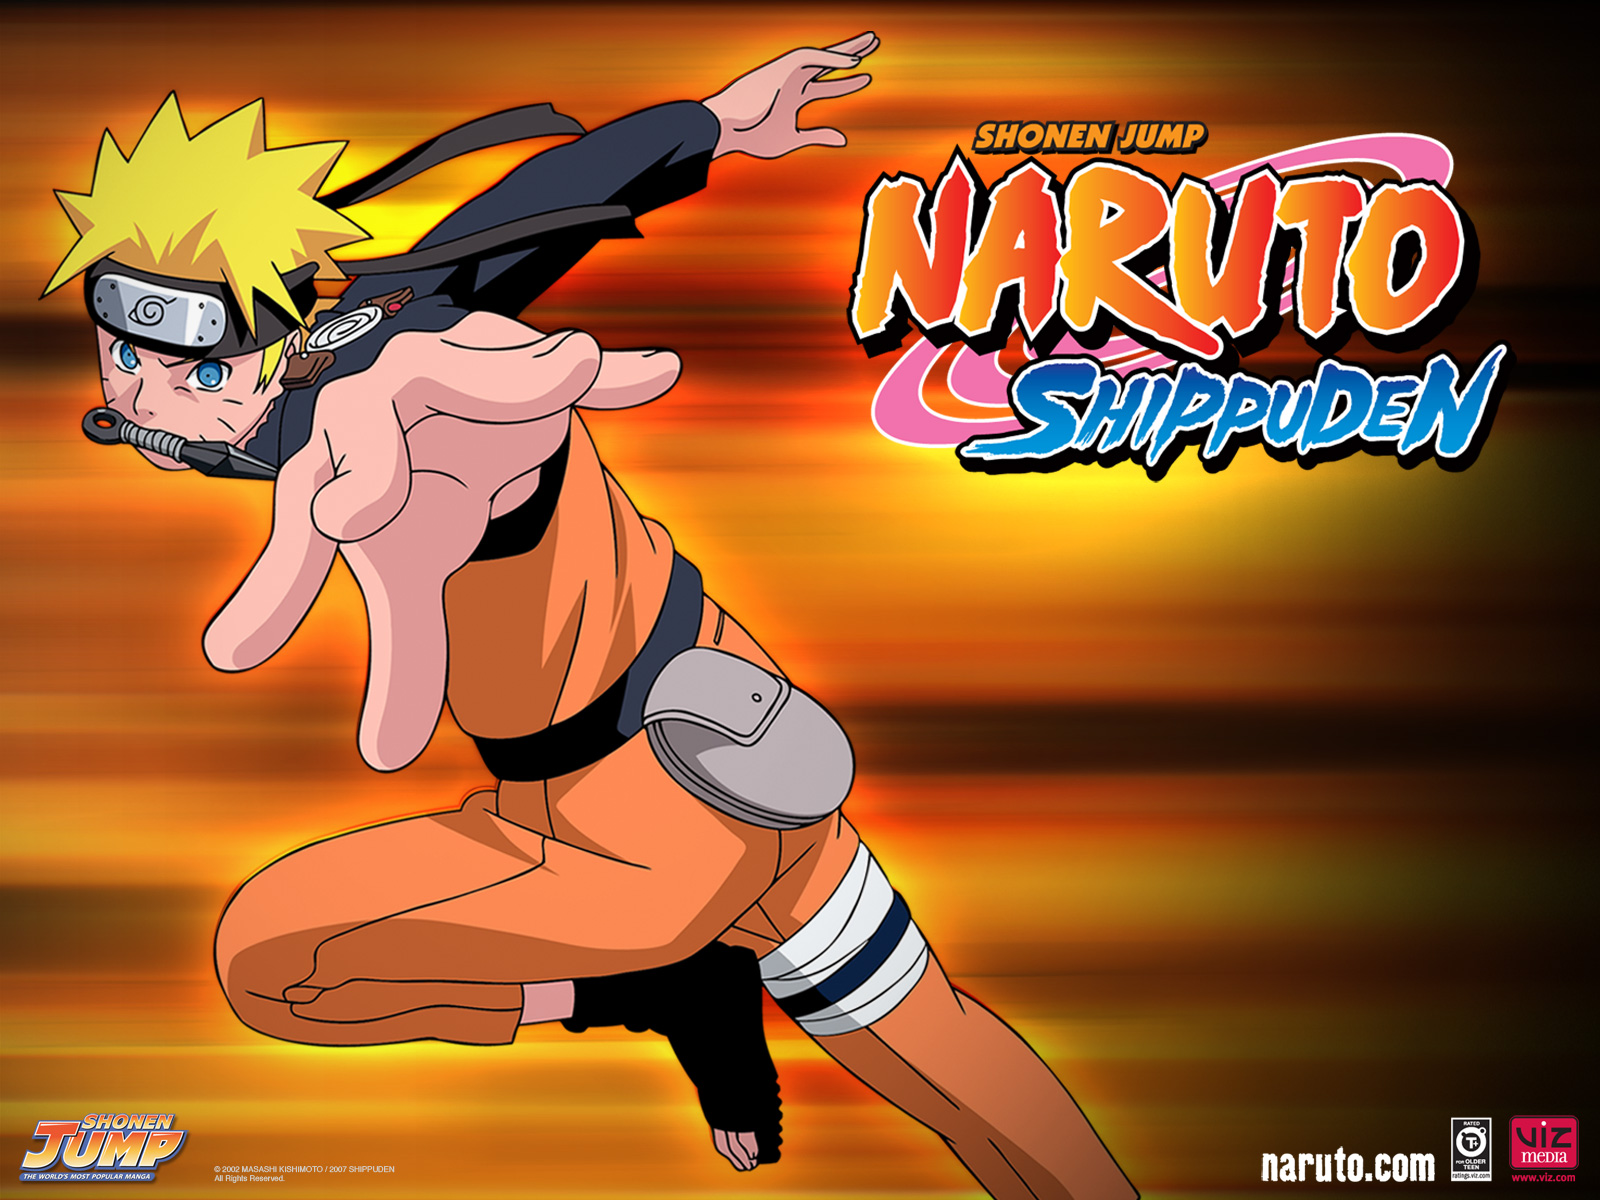 Naruto Shippuden Stream